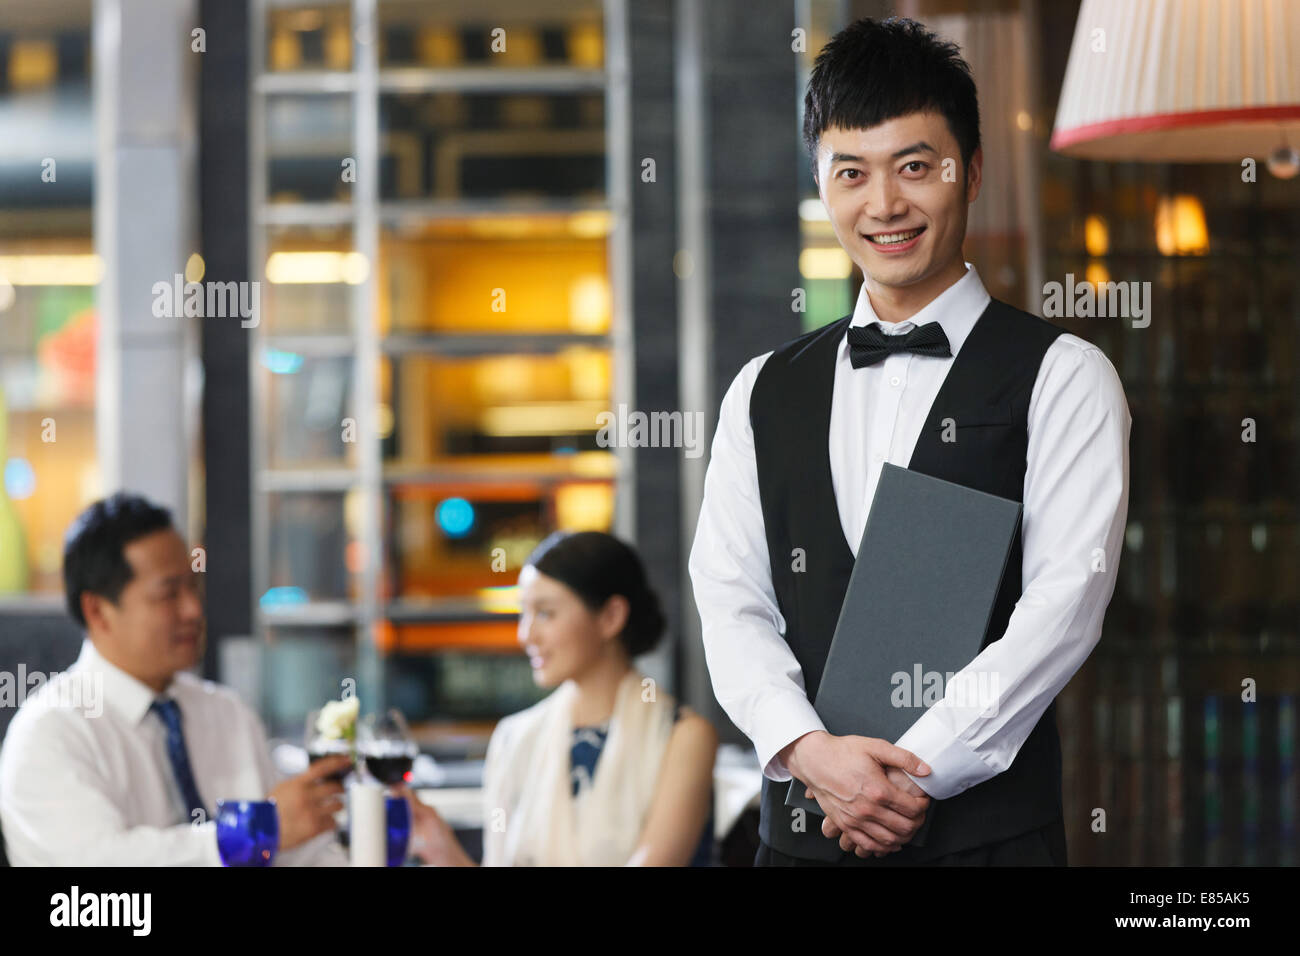 Portrait of hotel service staff Stock Photo